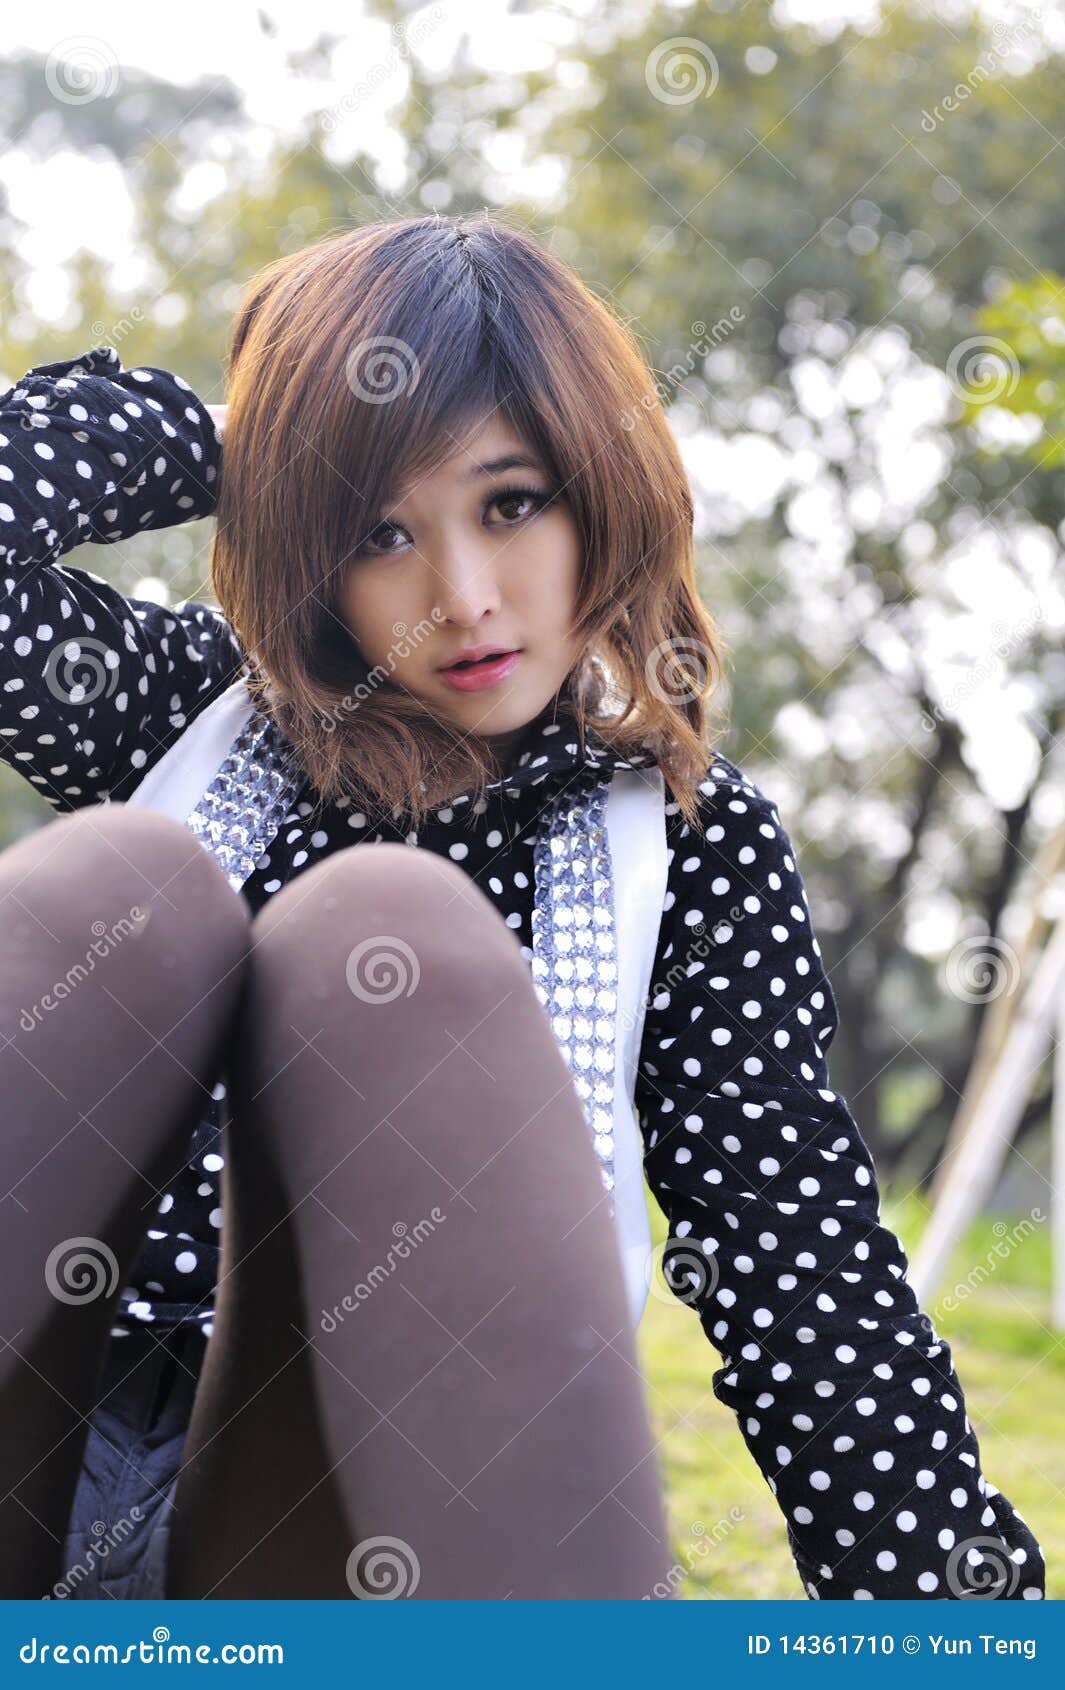 https://thumbs.dreamstime.com/z/pure-beautiful-asian-girl-14361710.jpg